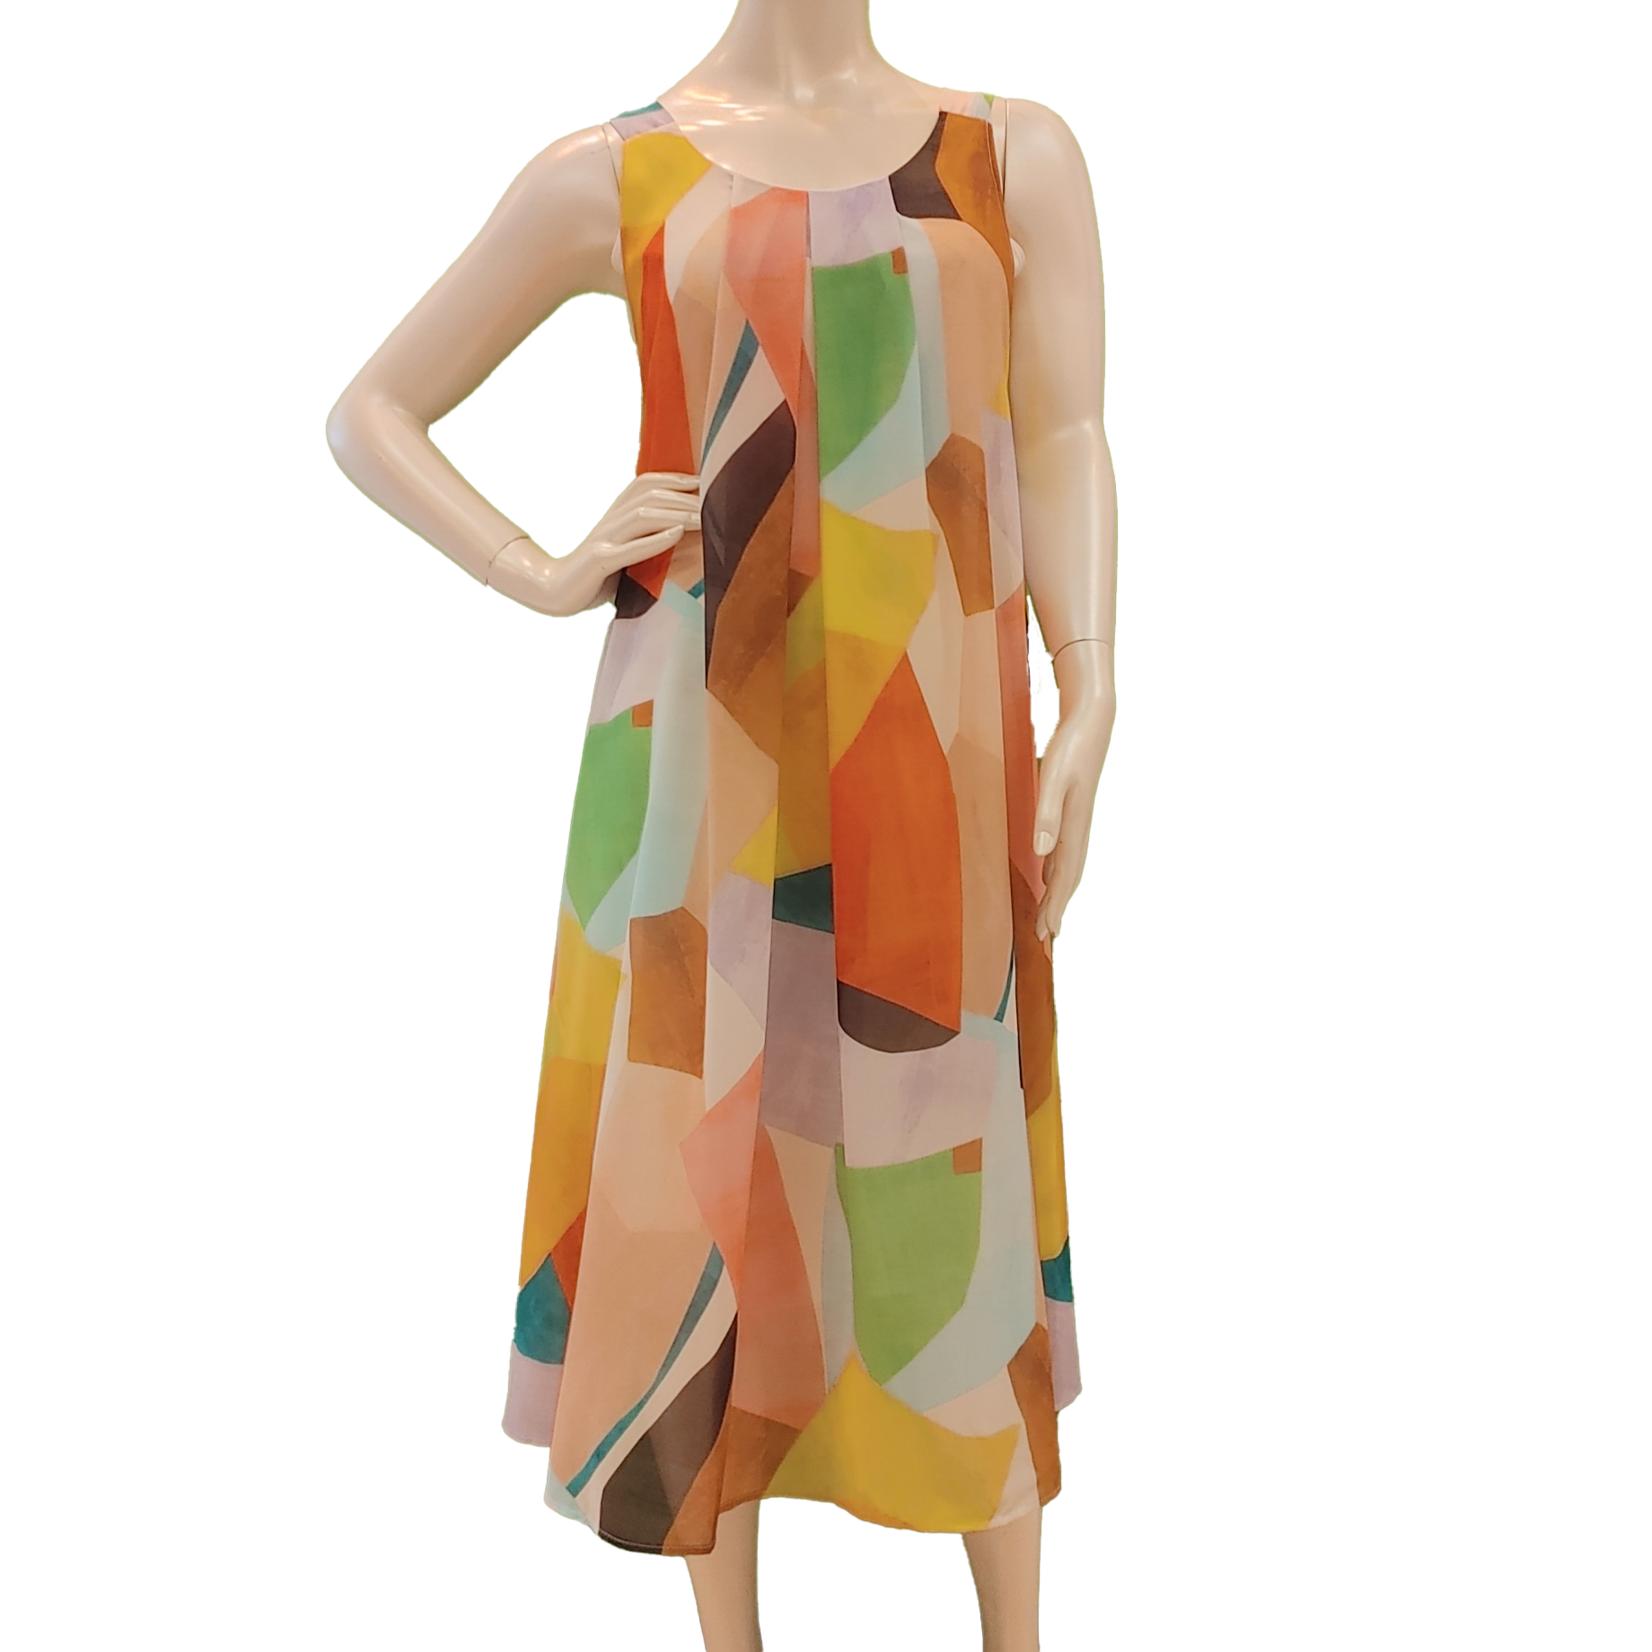 Artex sleeveless print dress with sheer overlay